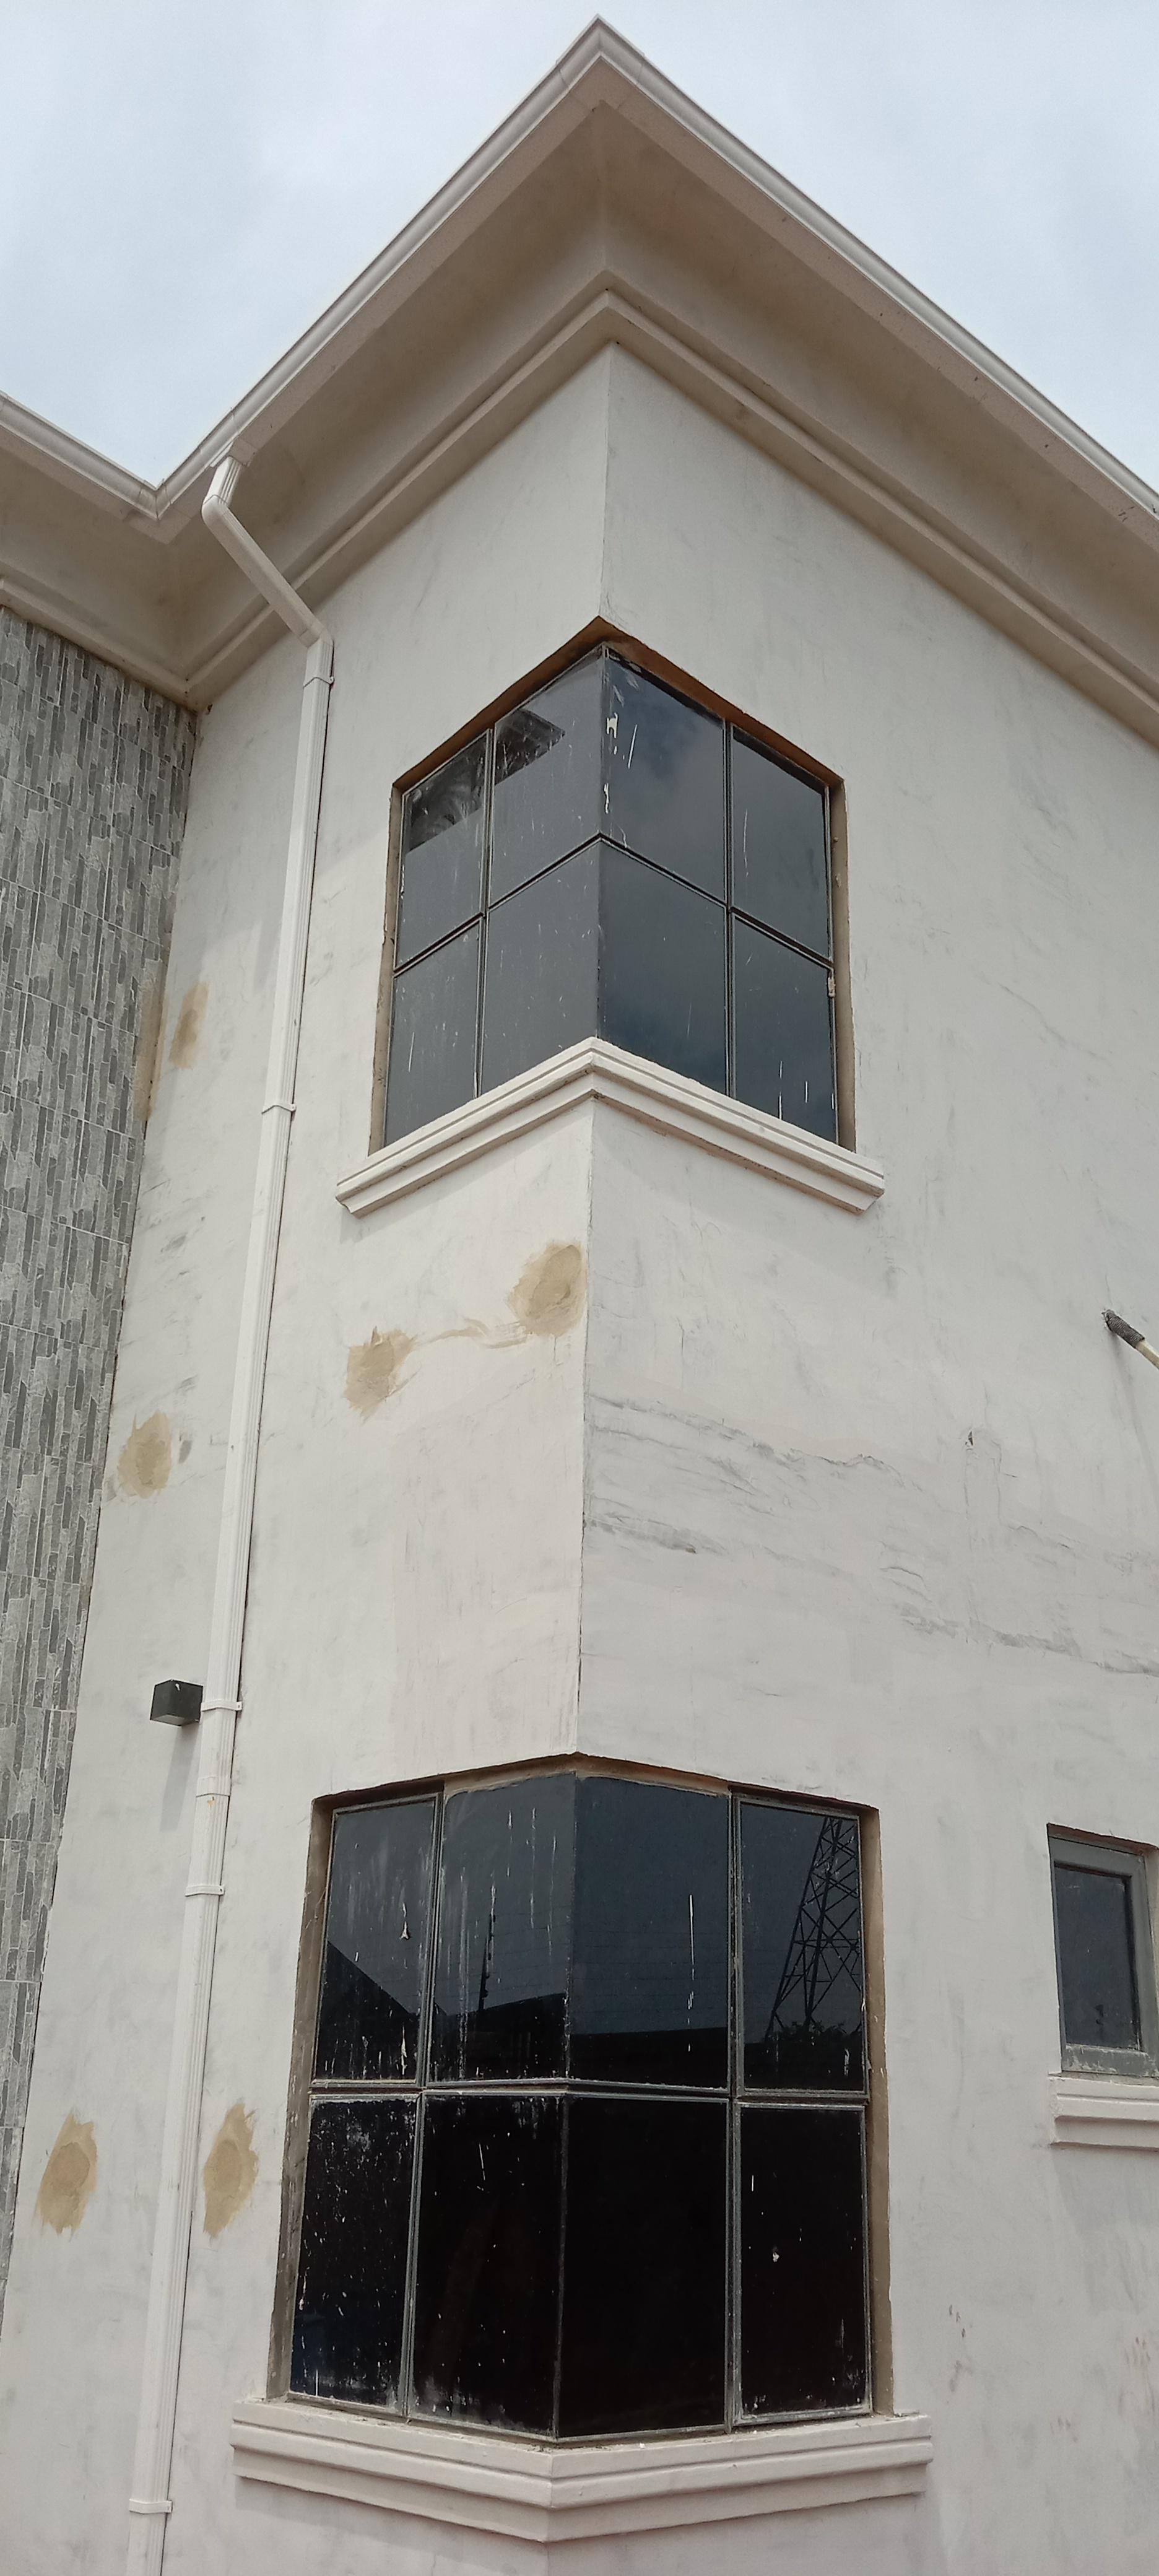 Transform Windows With Iron Burglary 